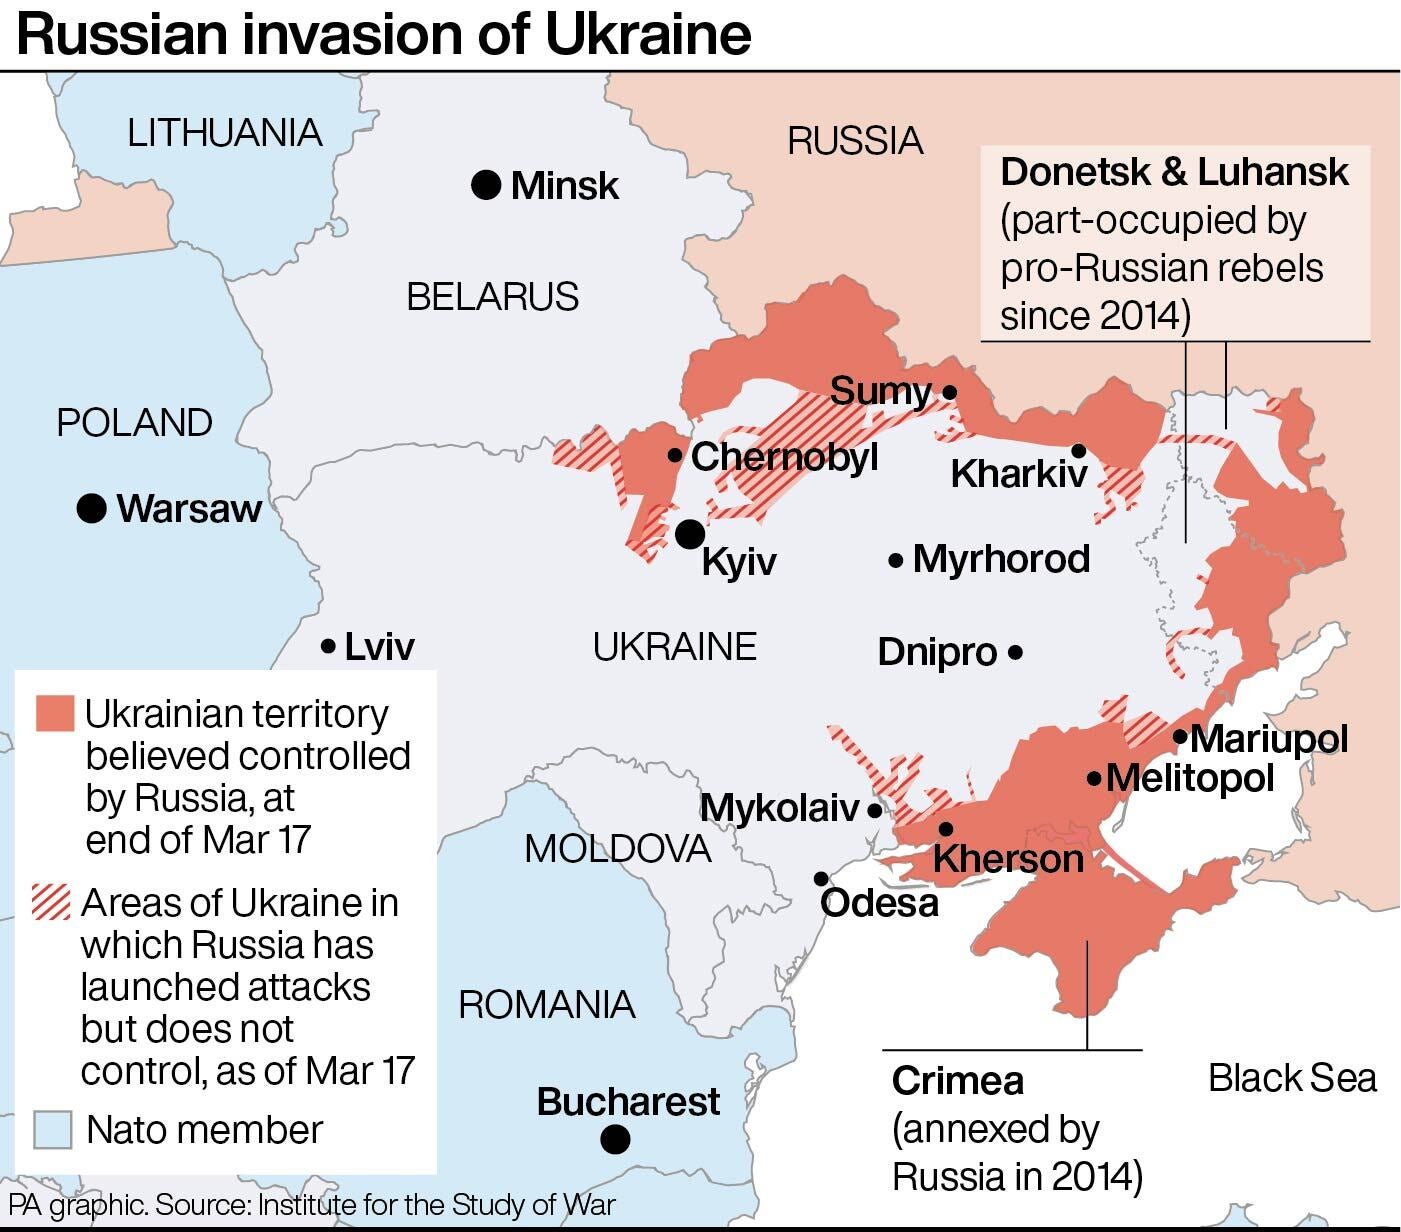 The extent of Russia’s invasion of Ukraine